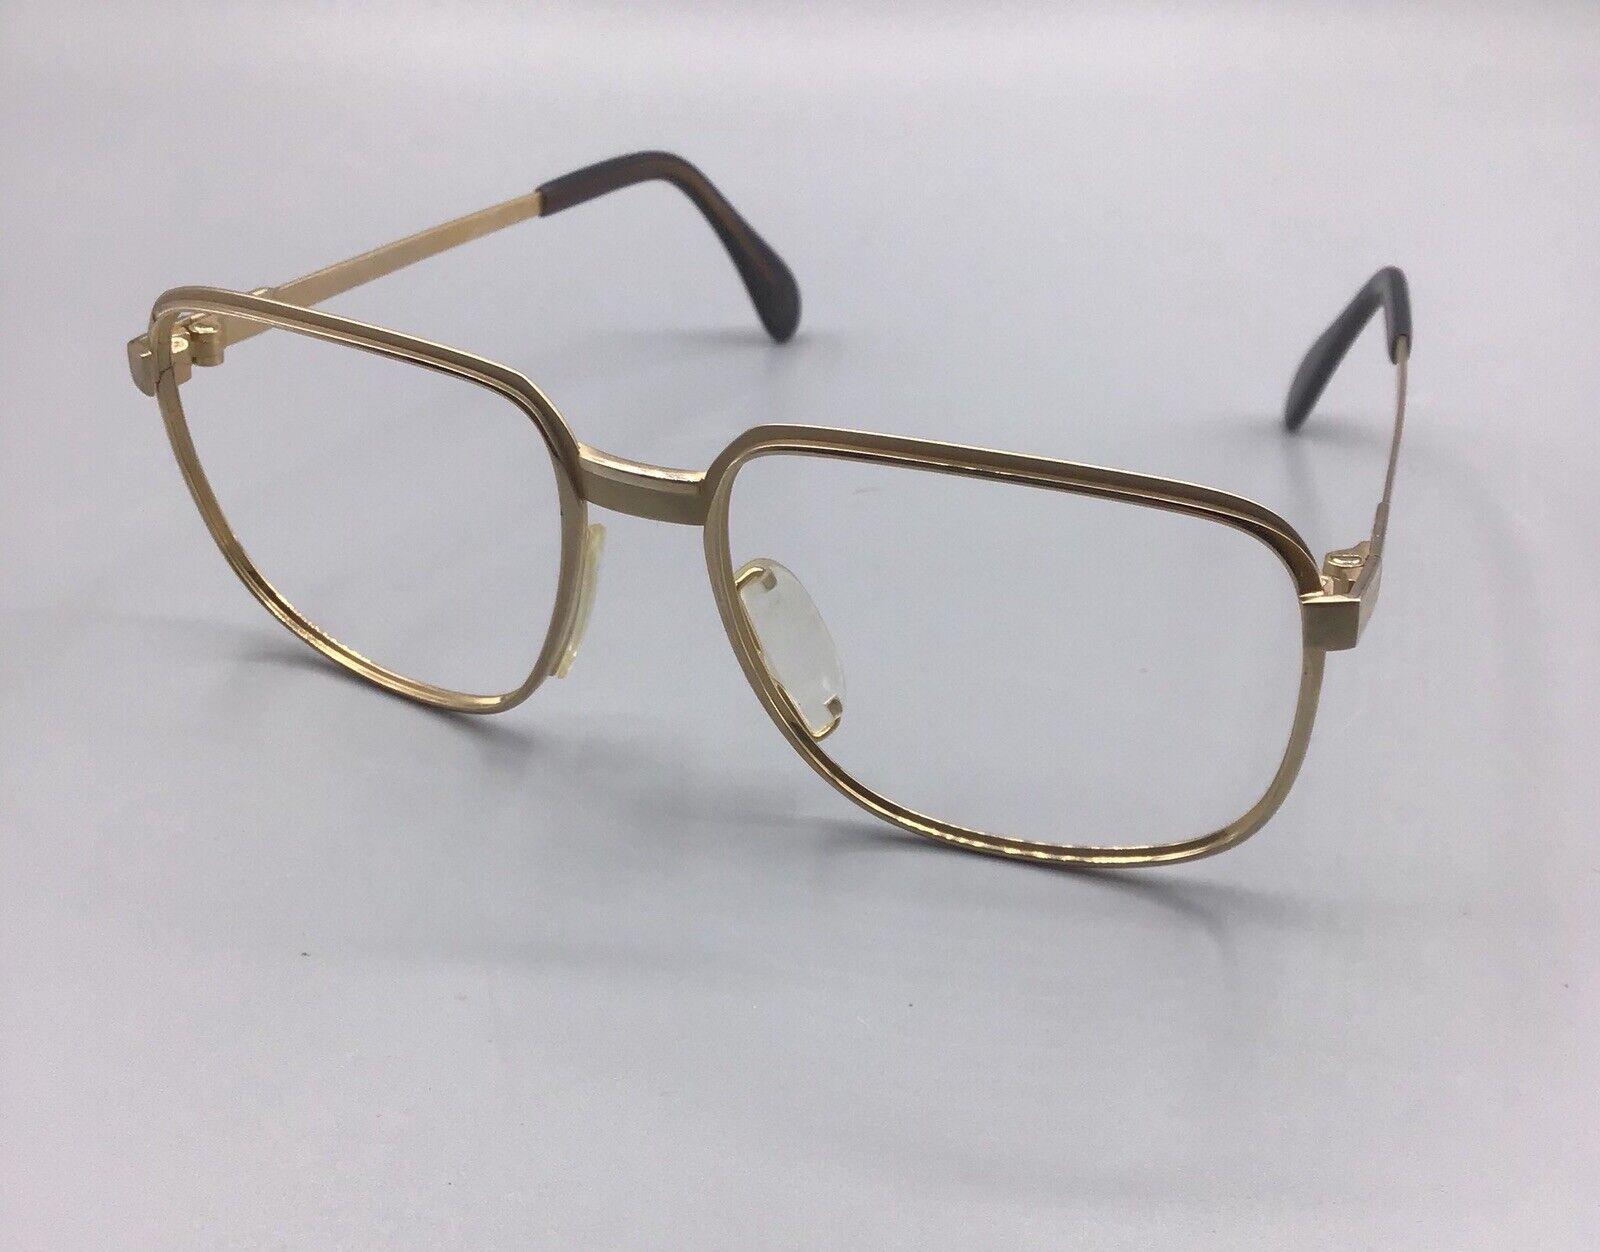 Metzler occhiale vintage gold laminated frame brillen lunettes Germany BLC 7810